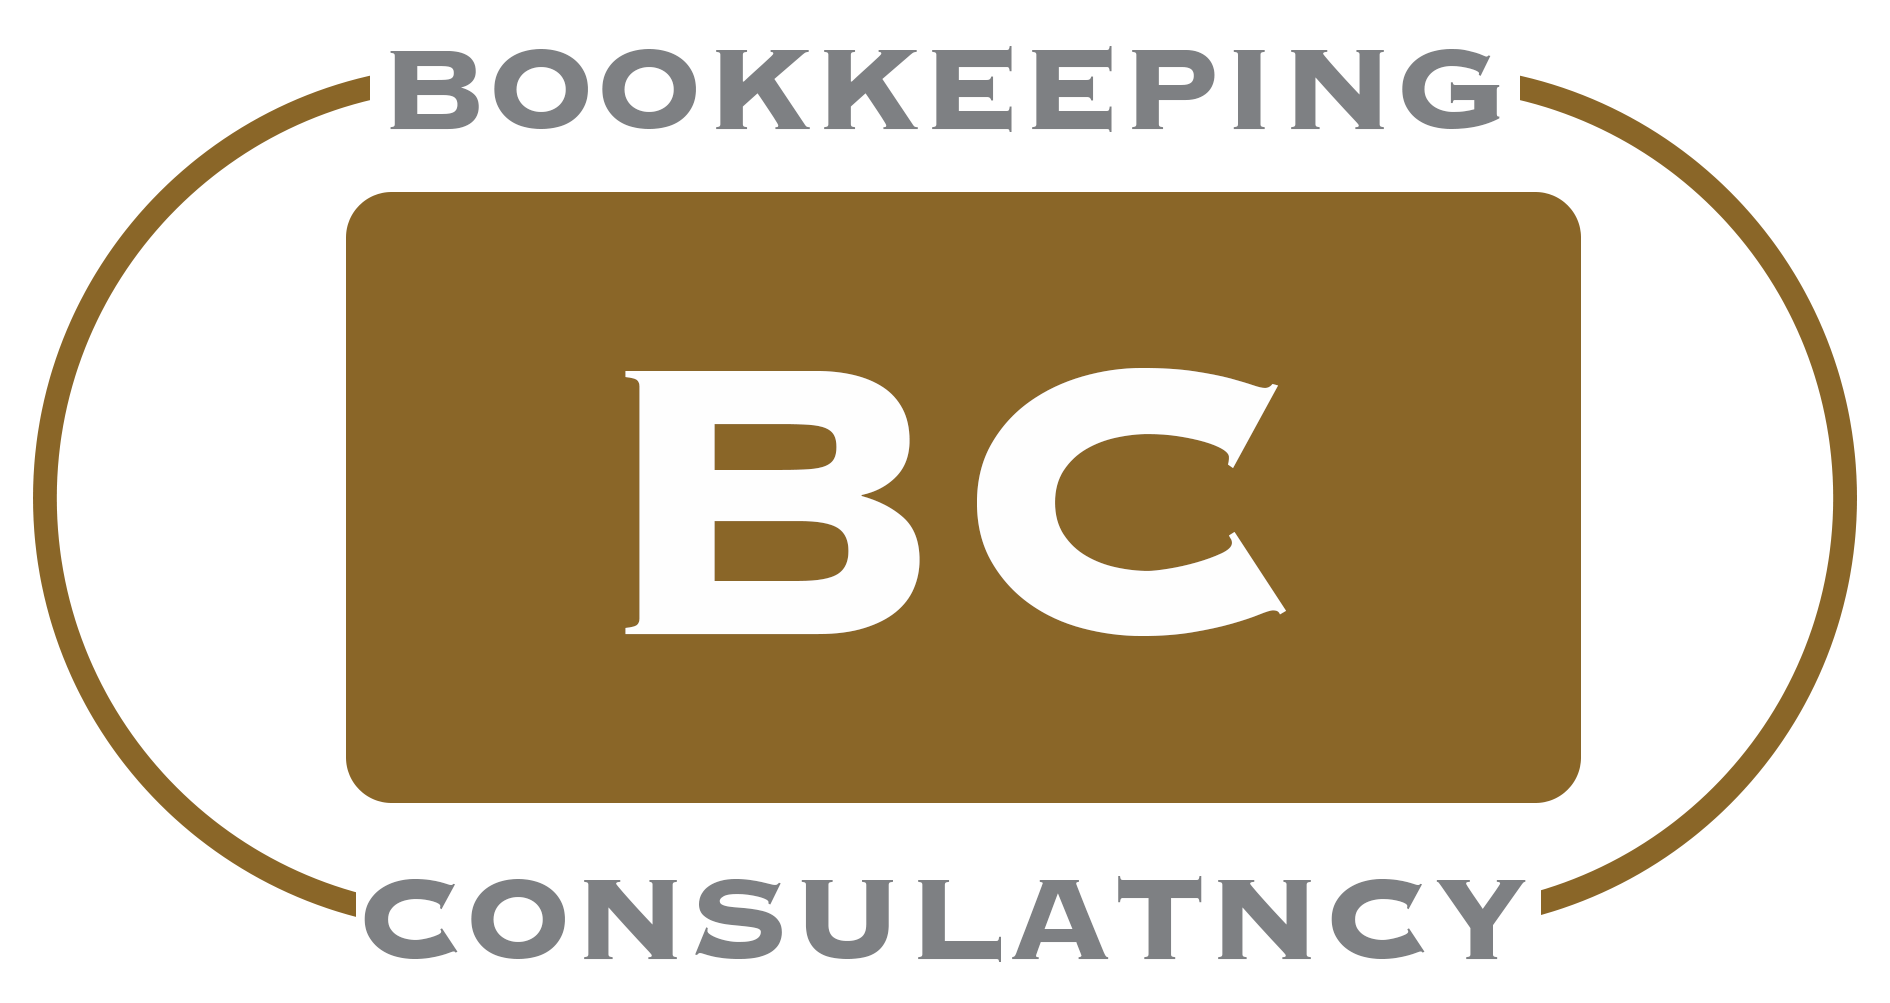 Bookkeeping Consultancy